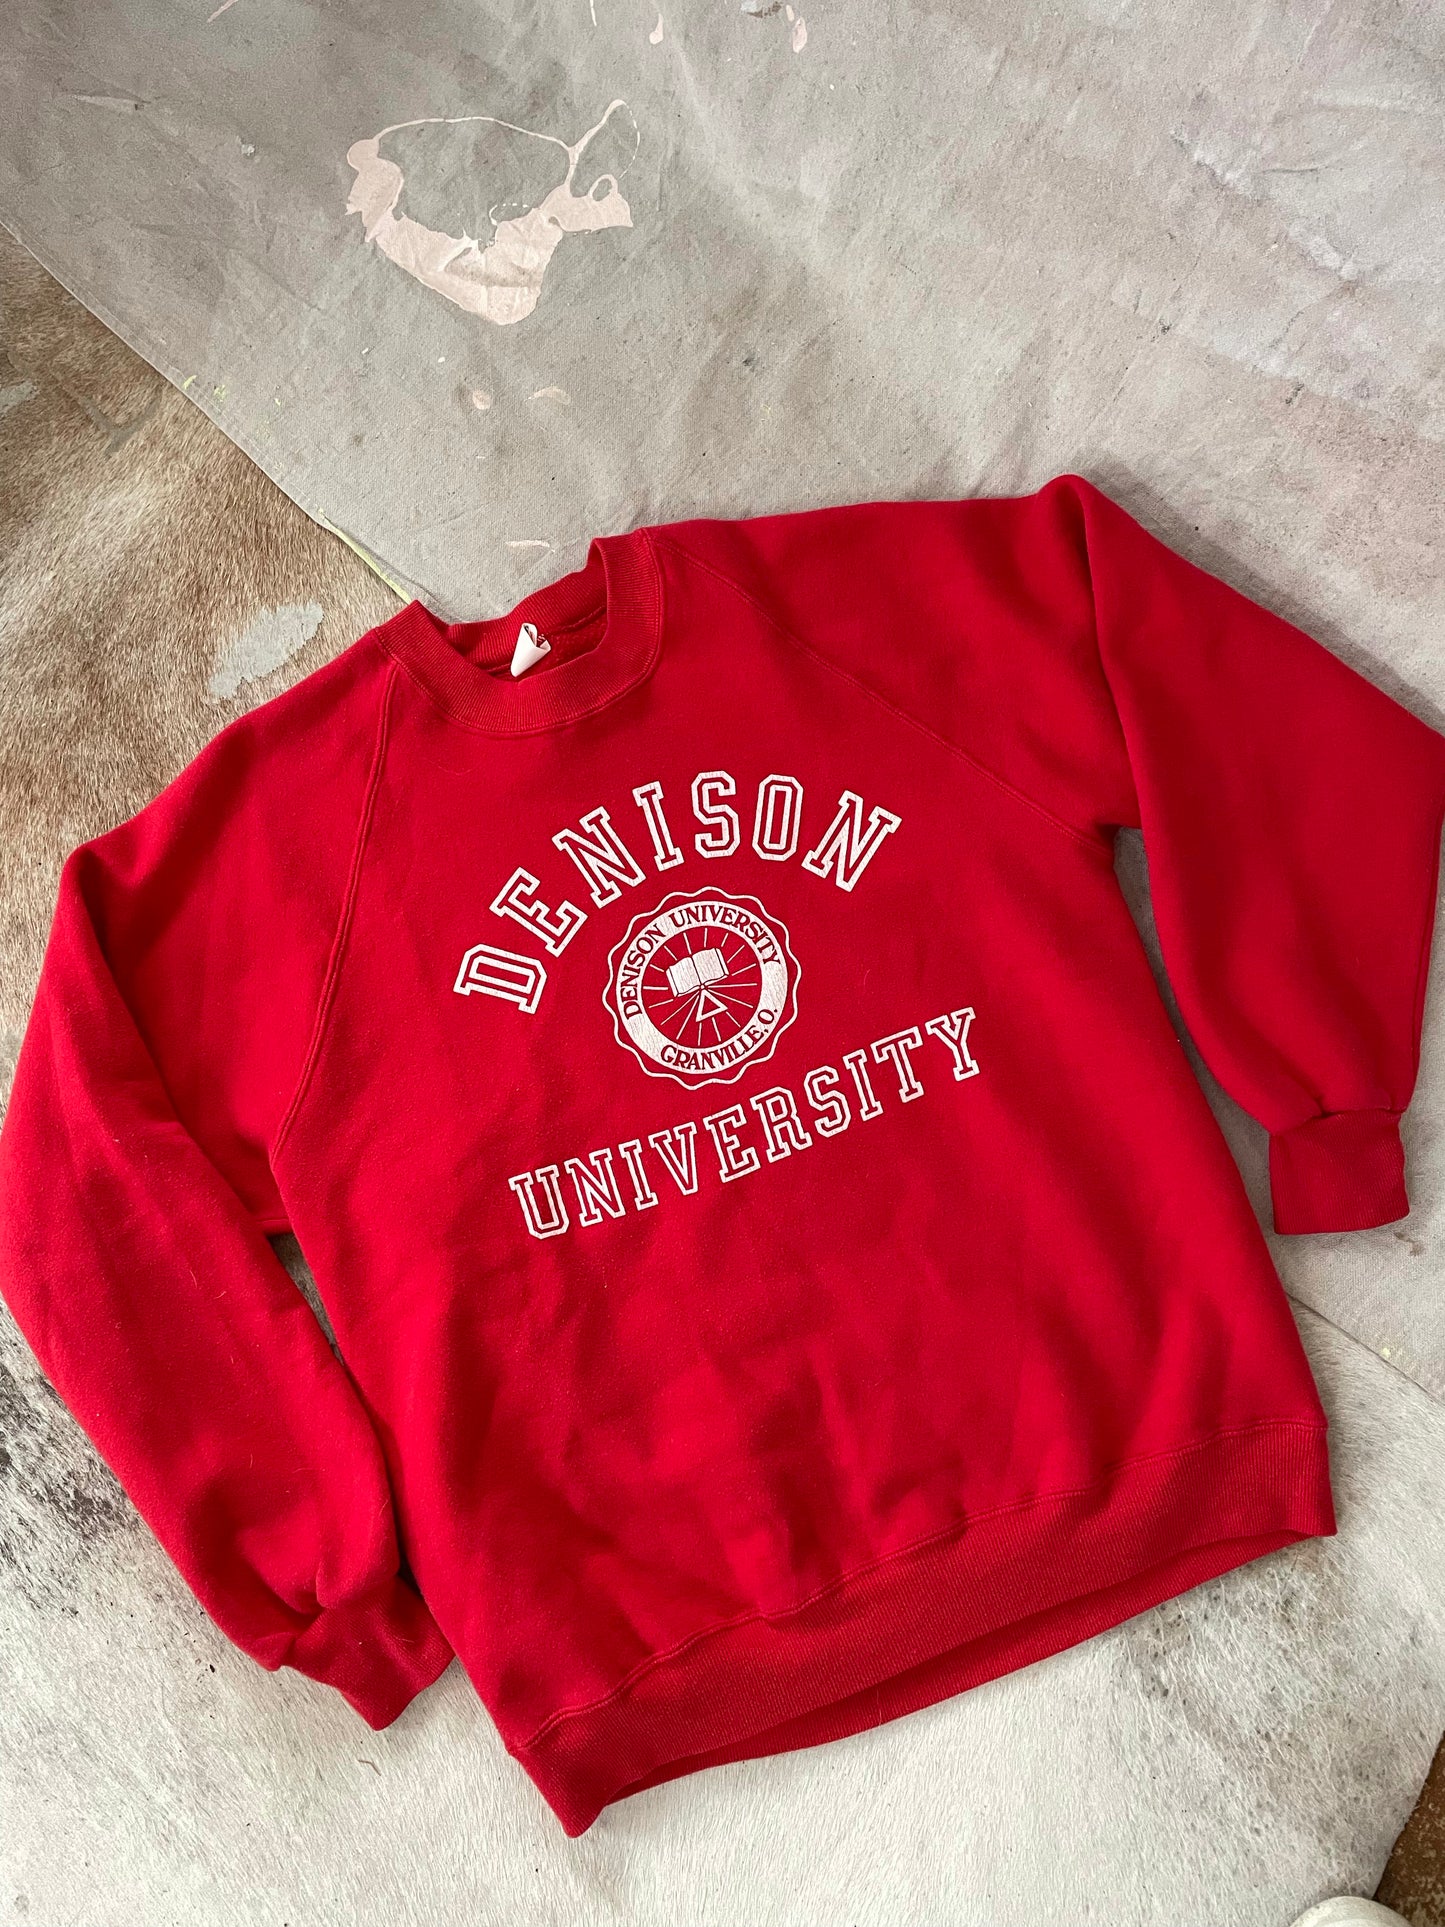 Denison University Sweatshirt